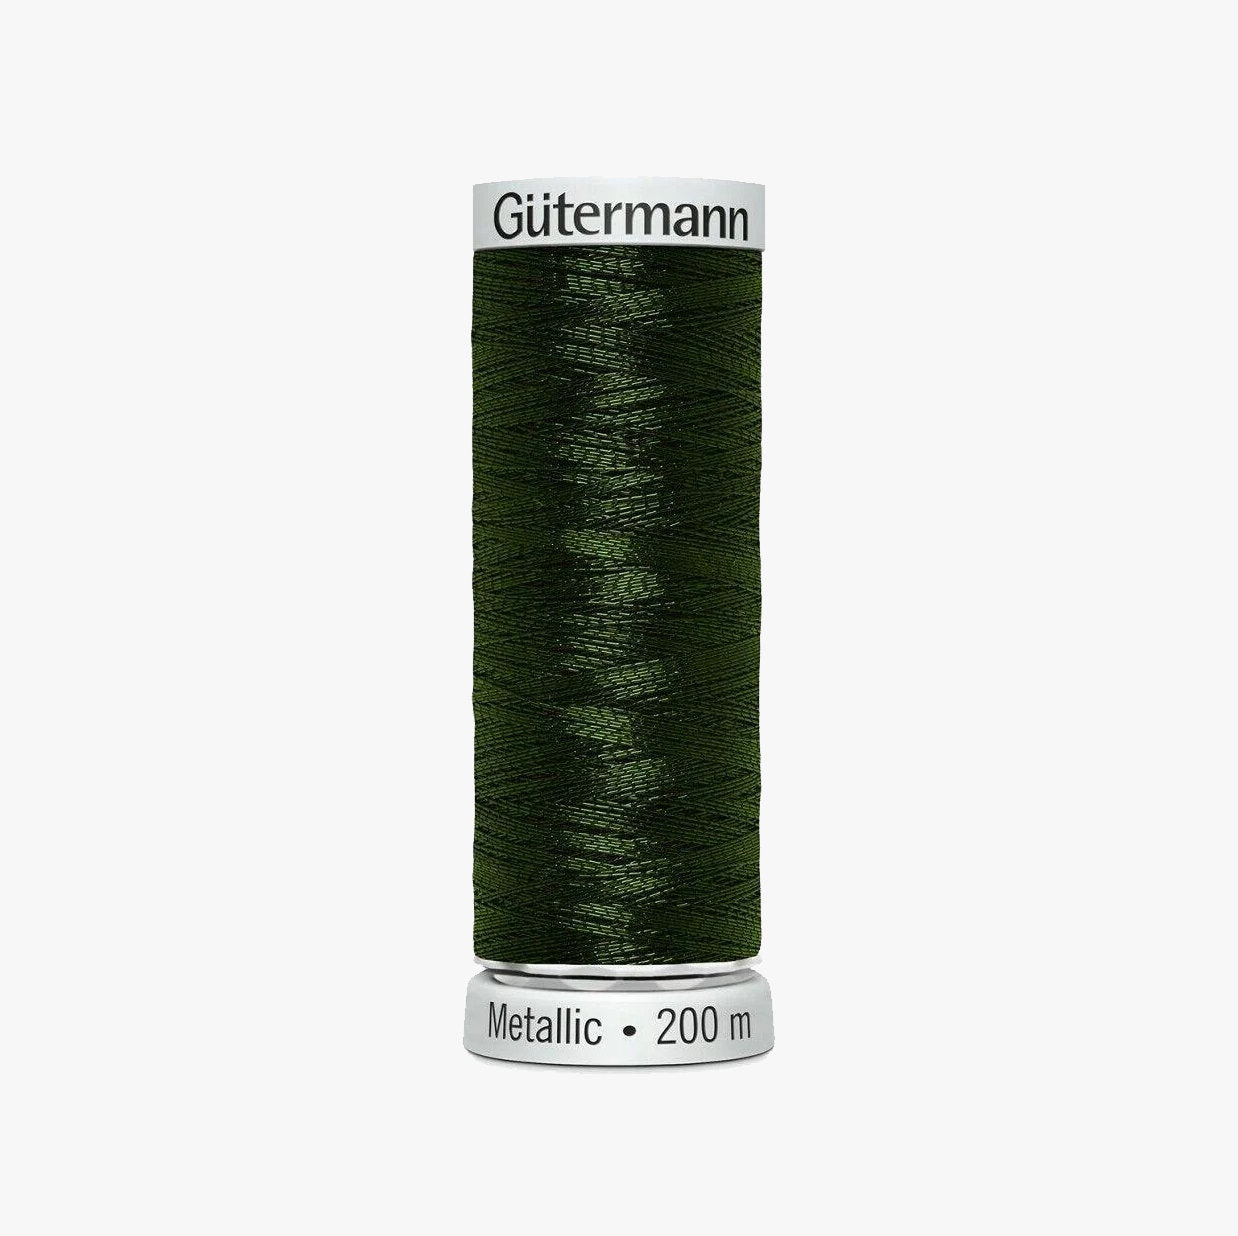 7056 Gutermann Metallic Thread 200m - Metallic Effect for Decorative Seams and Machine Embroidery